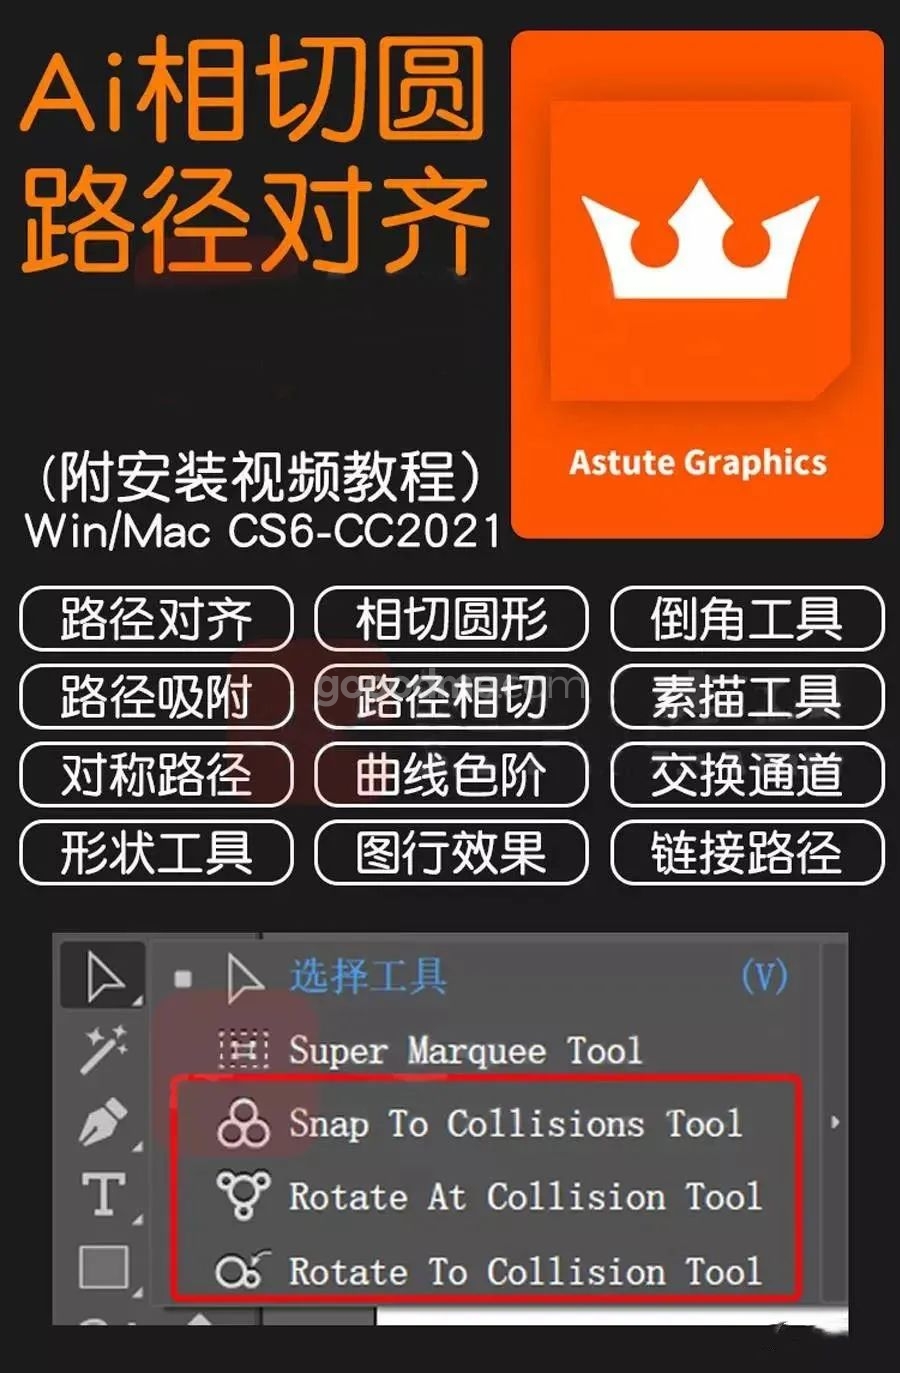 715 Win/MAC Astute Graphics AI平面矢量创意插件设计工具AI插件免费下载